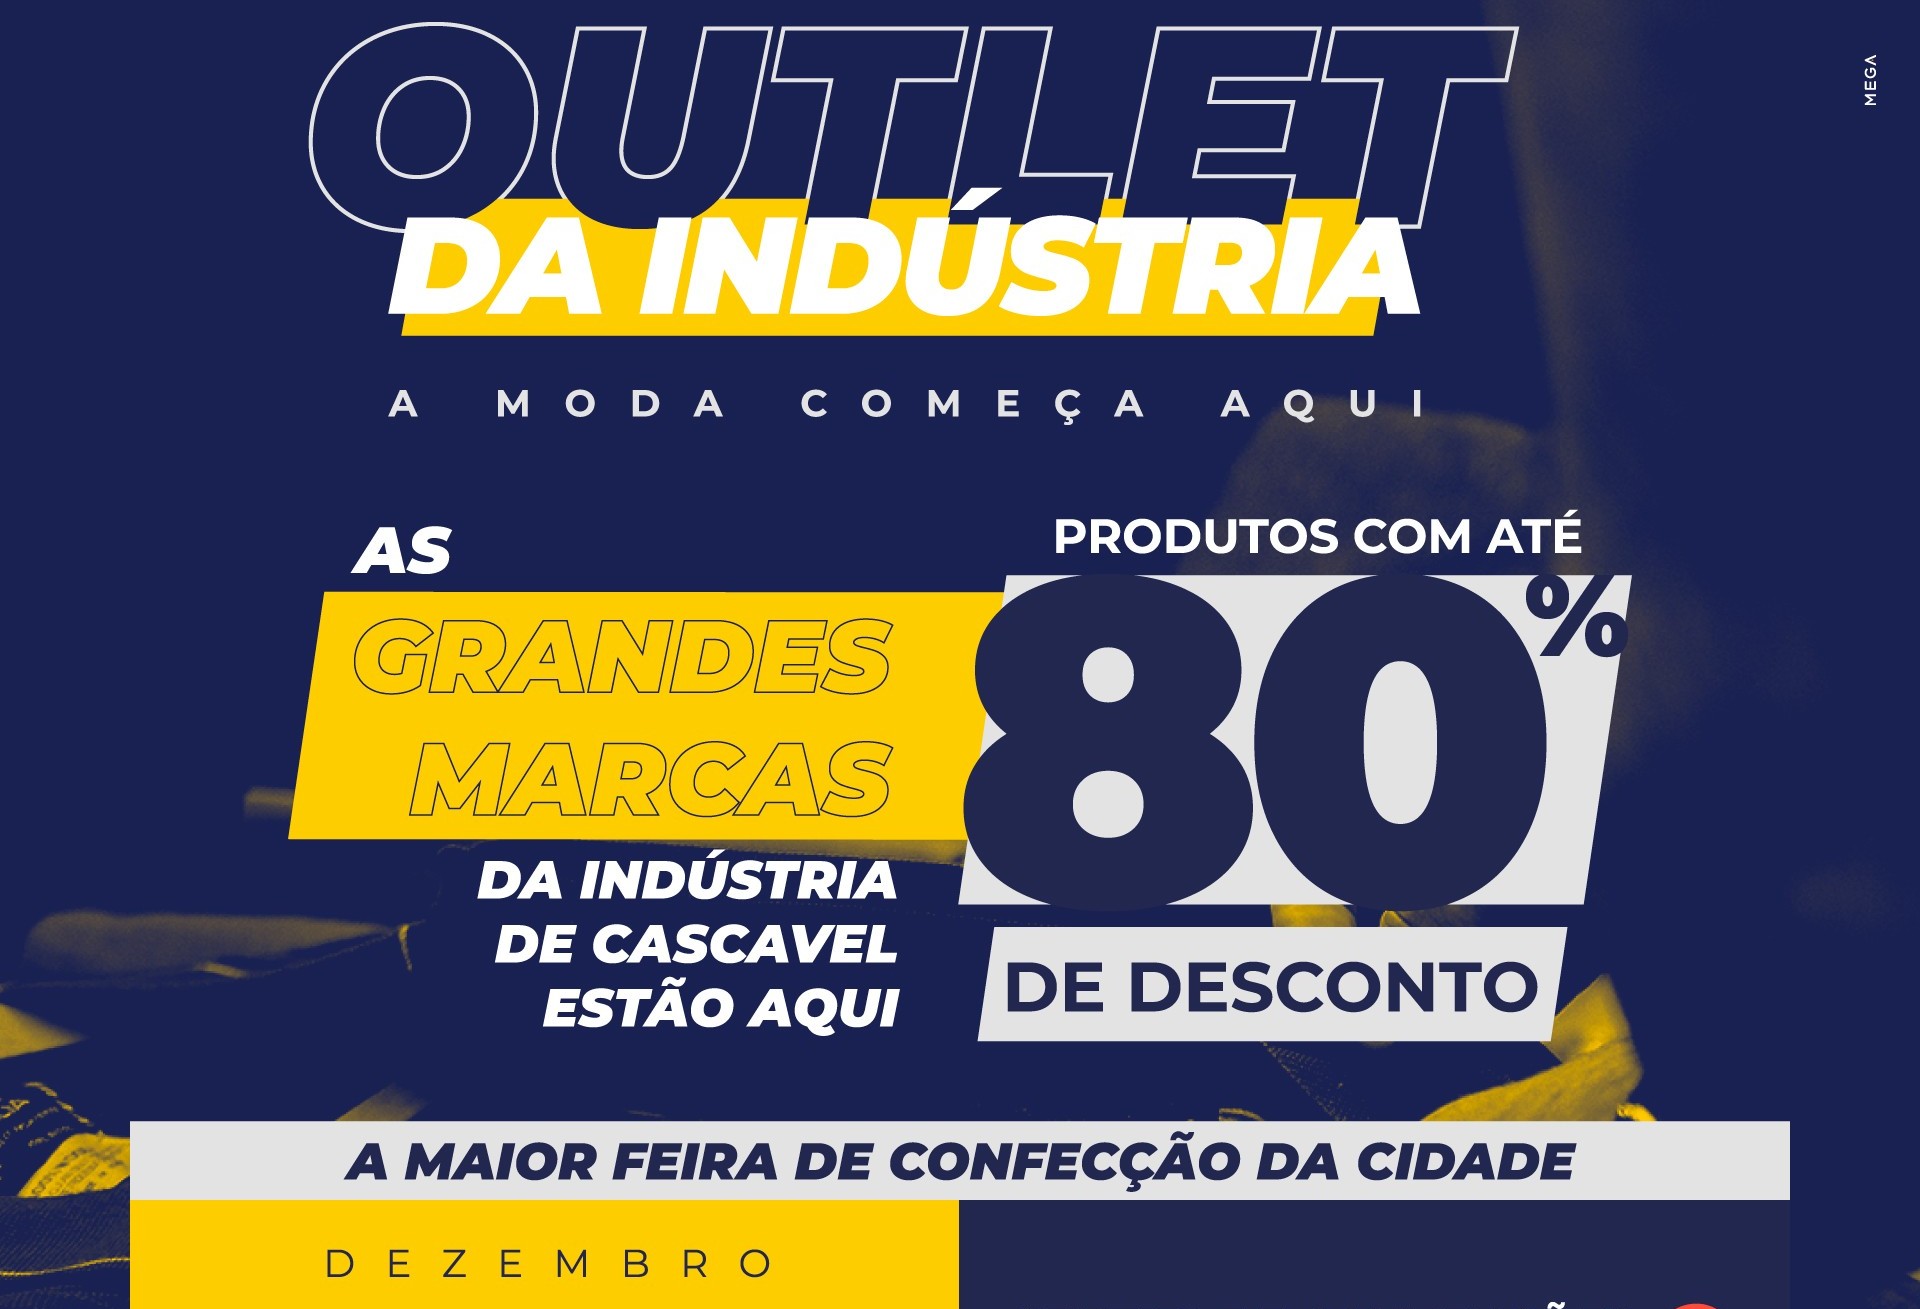  Evento  promove  "Outlet da Indústria confeccionista de Cascavel"